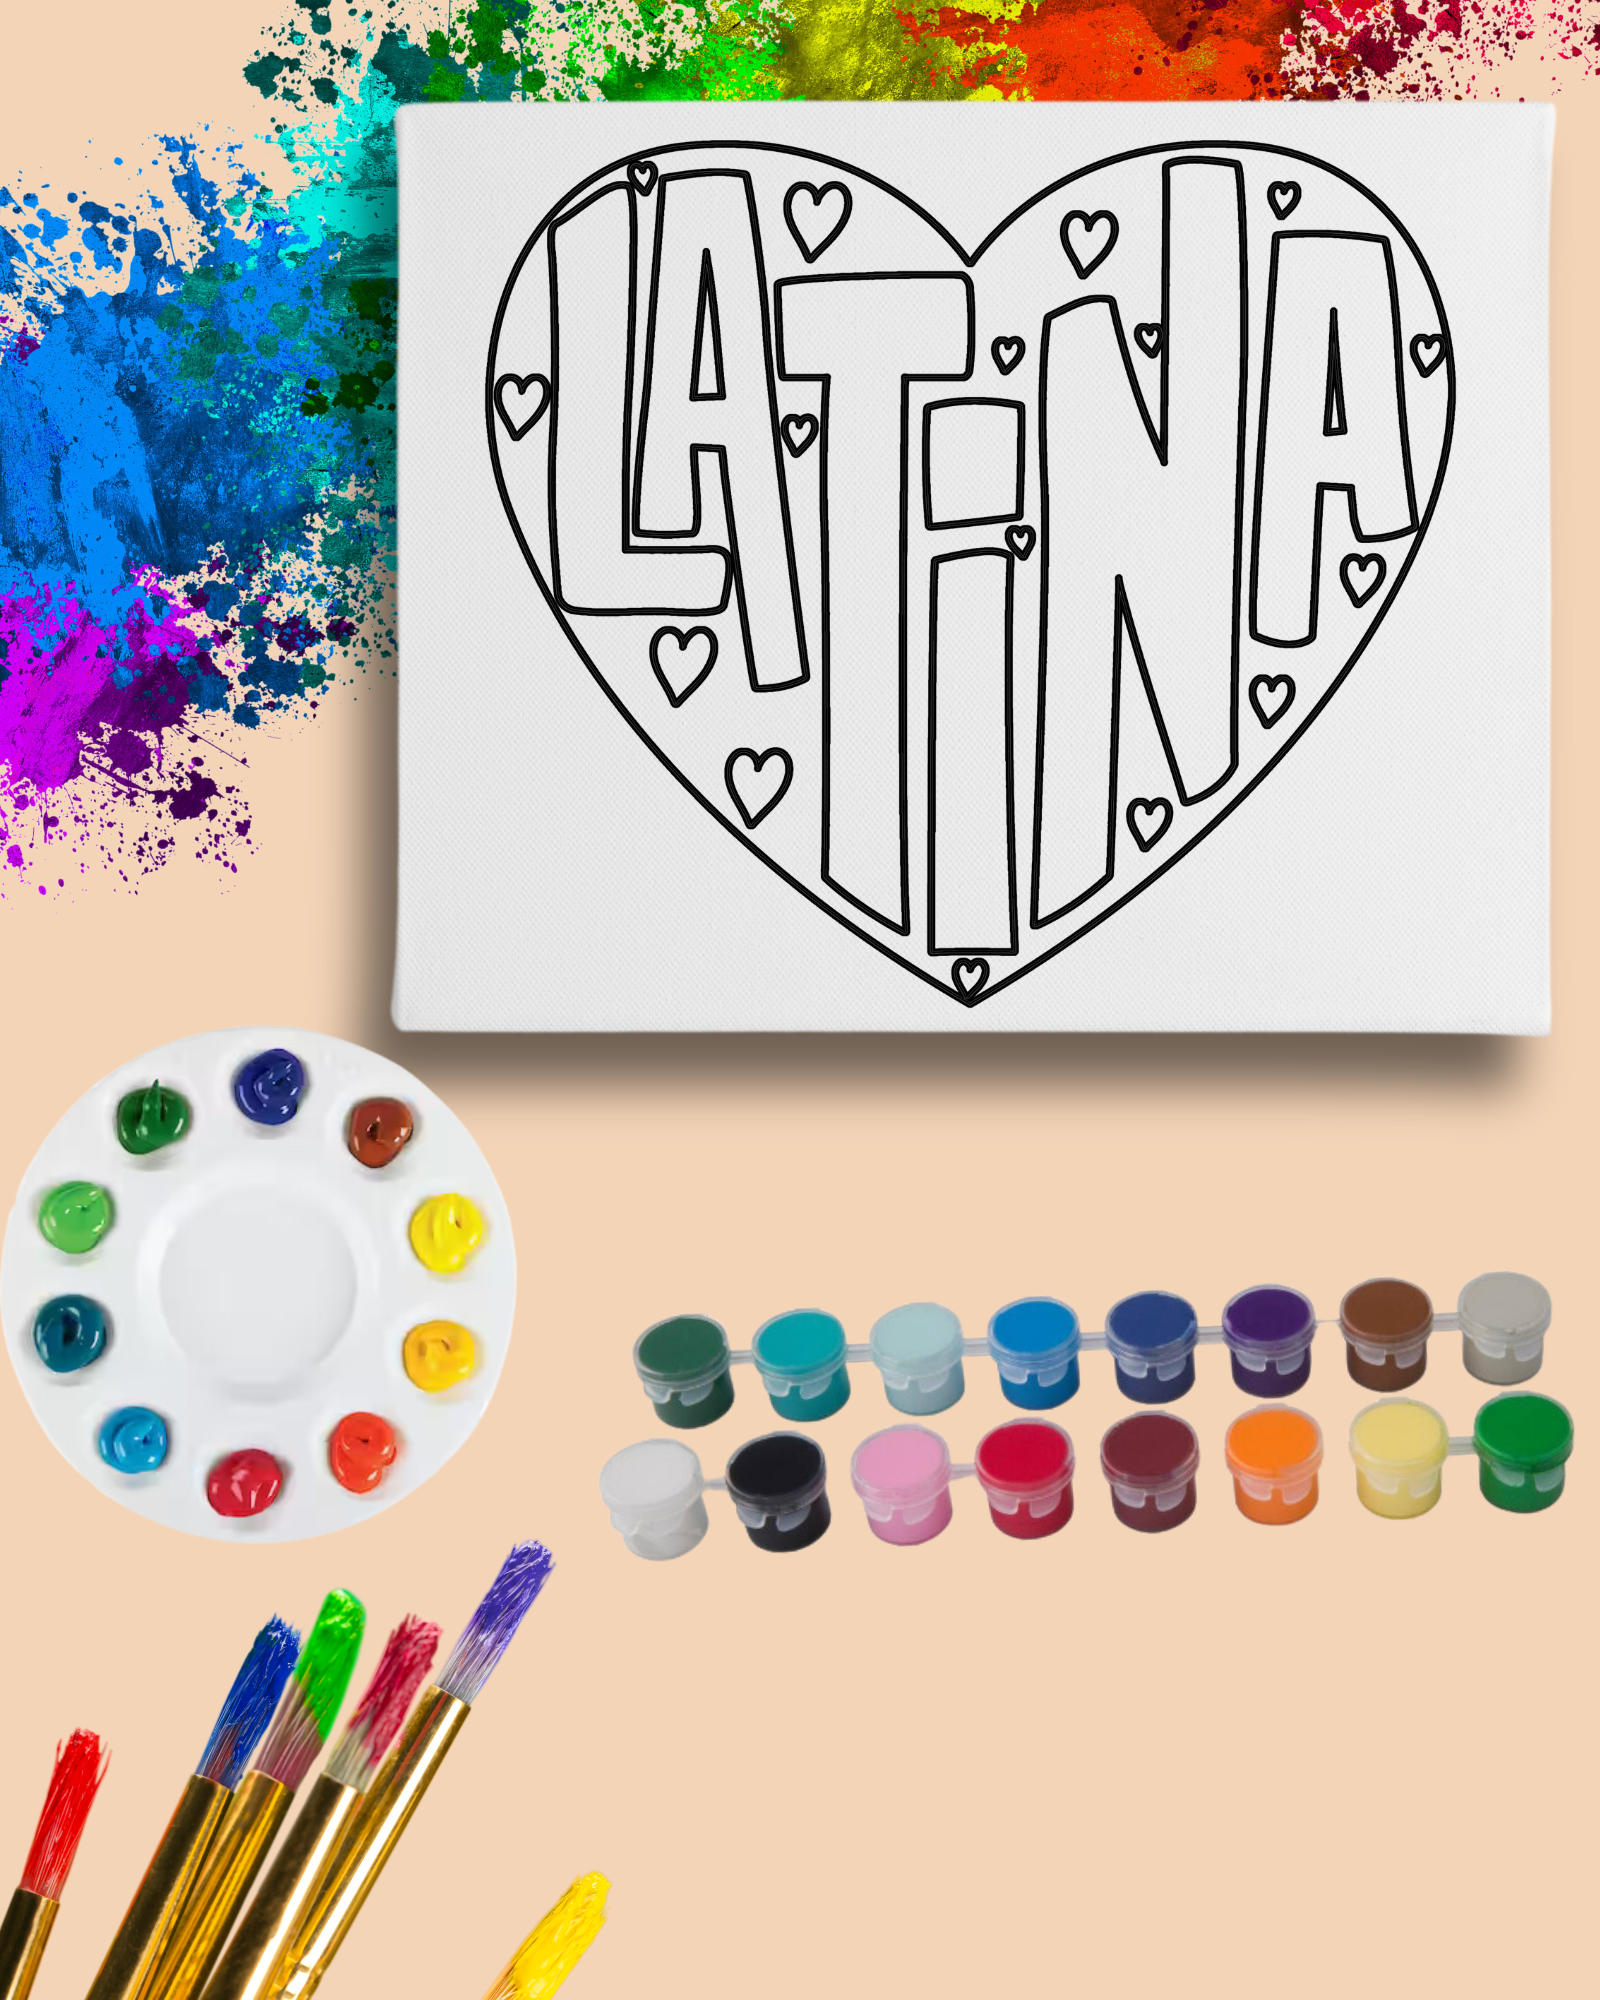 DIY Paint Party Kit - 11x14 Canvas - Latina Heart